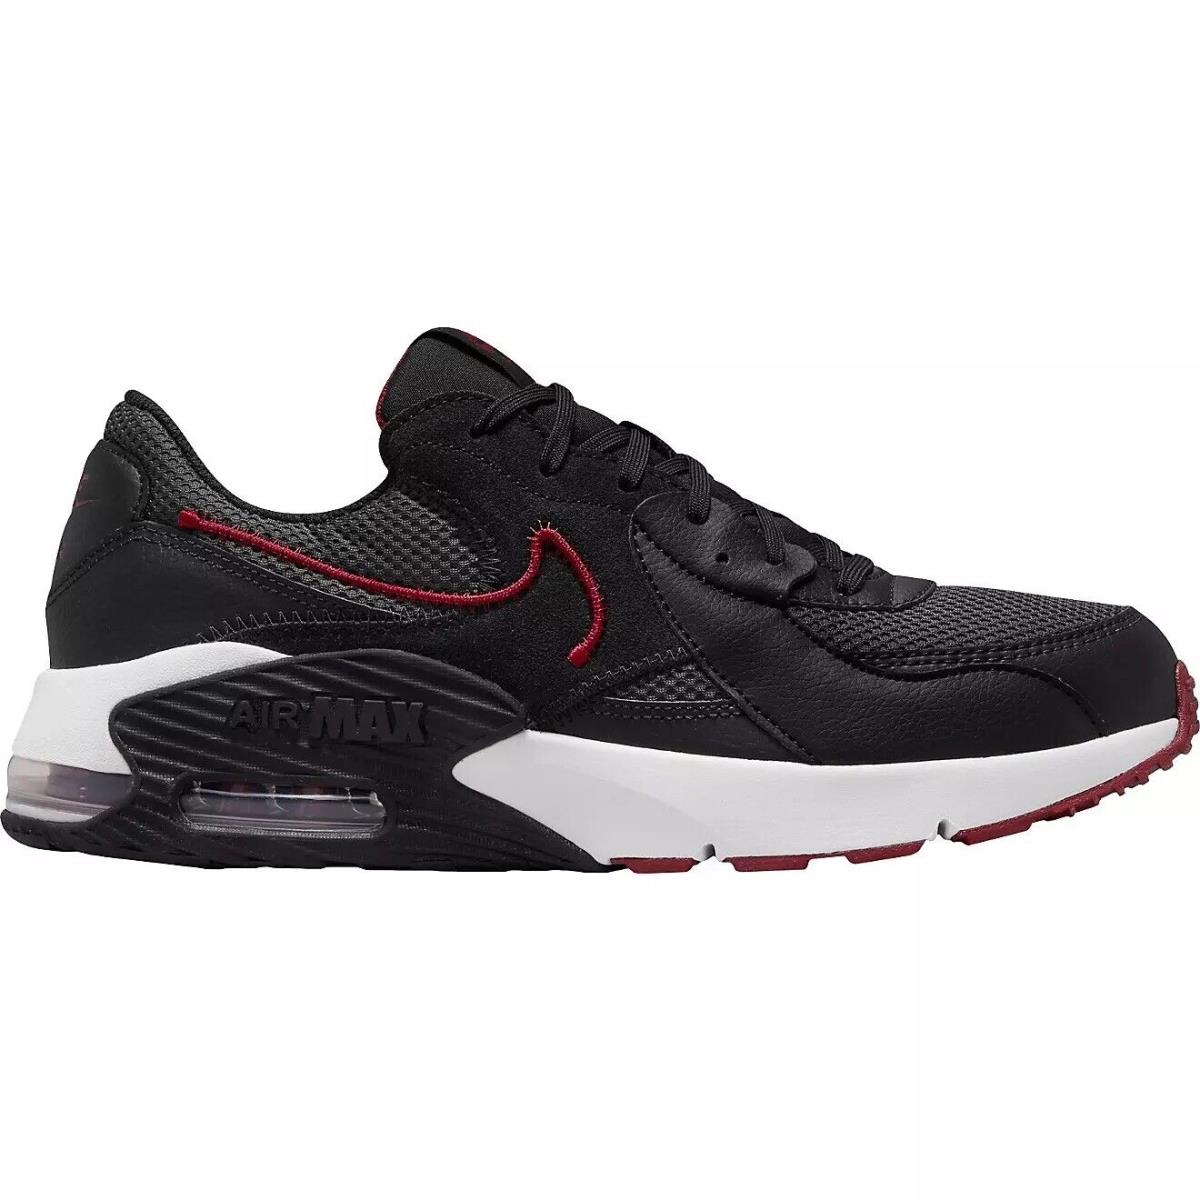 Mens Nike Air Max Excee Running Shoes Sneakers Black White Maroon DQ3993 001 - Black